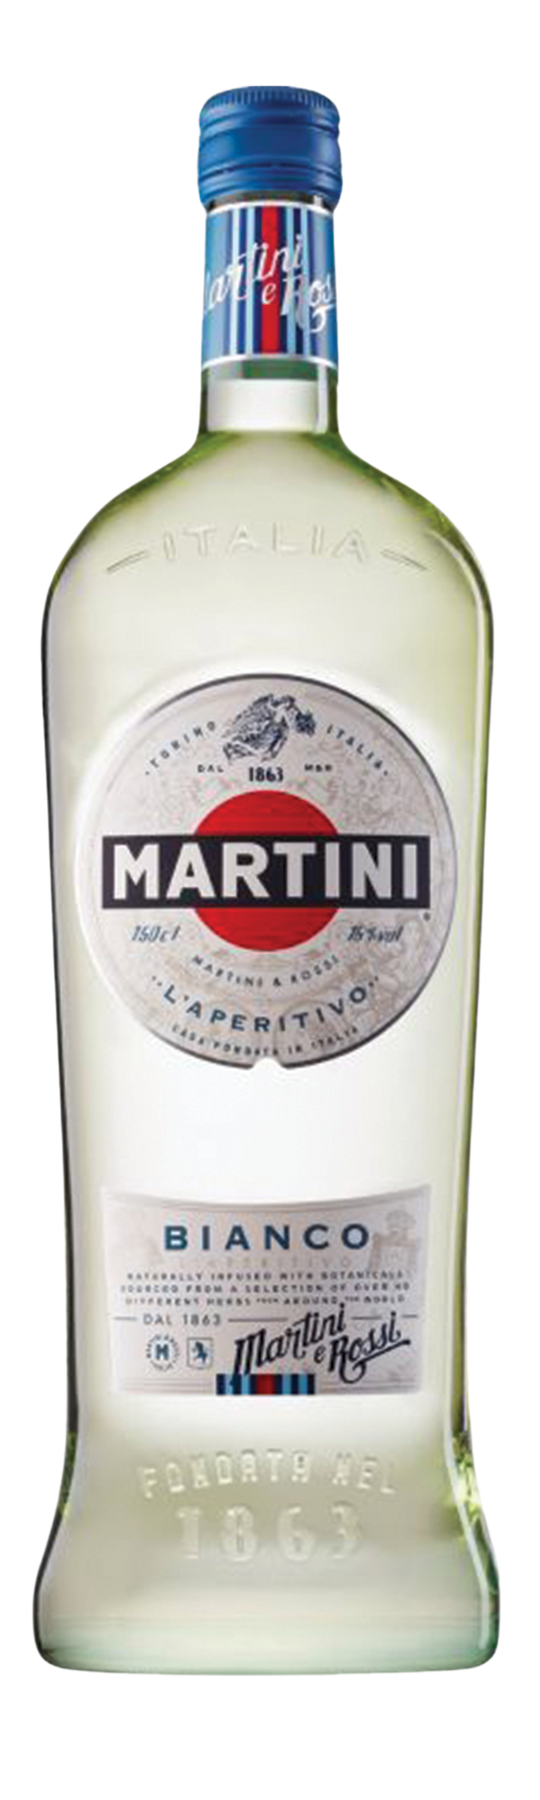 Martini Bianco 15% 150cl